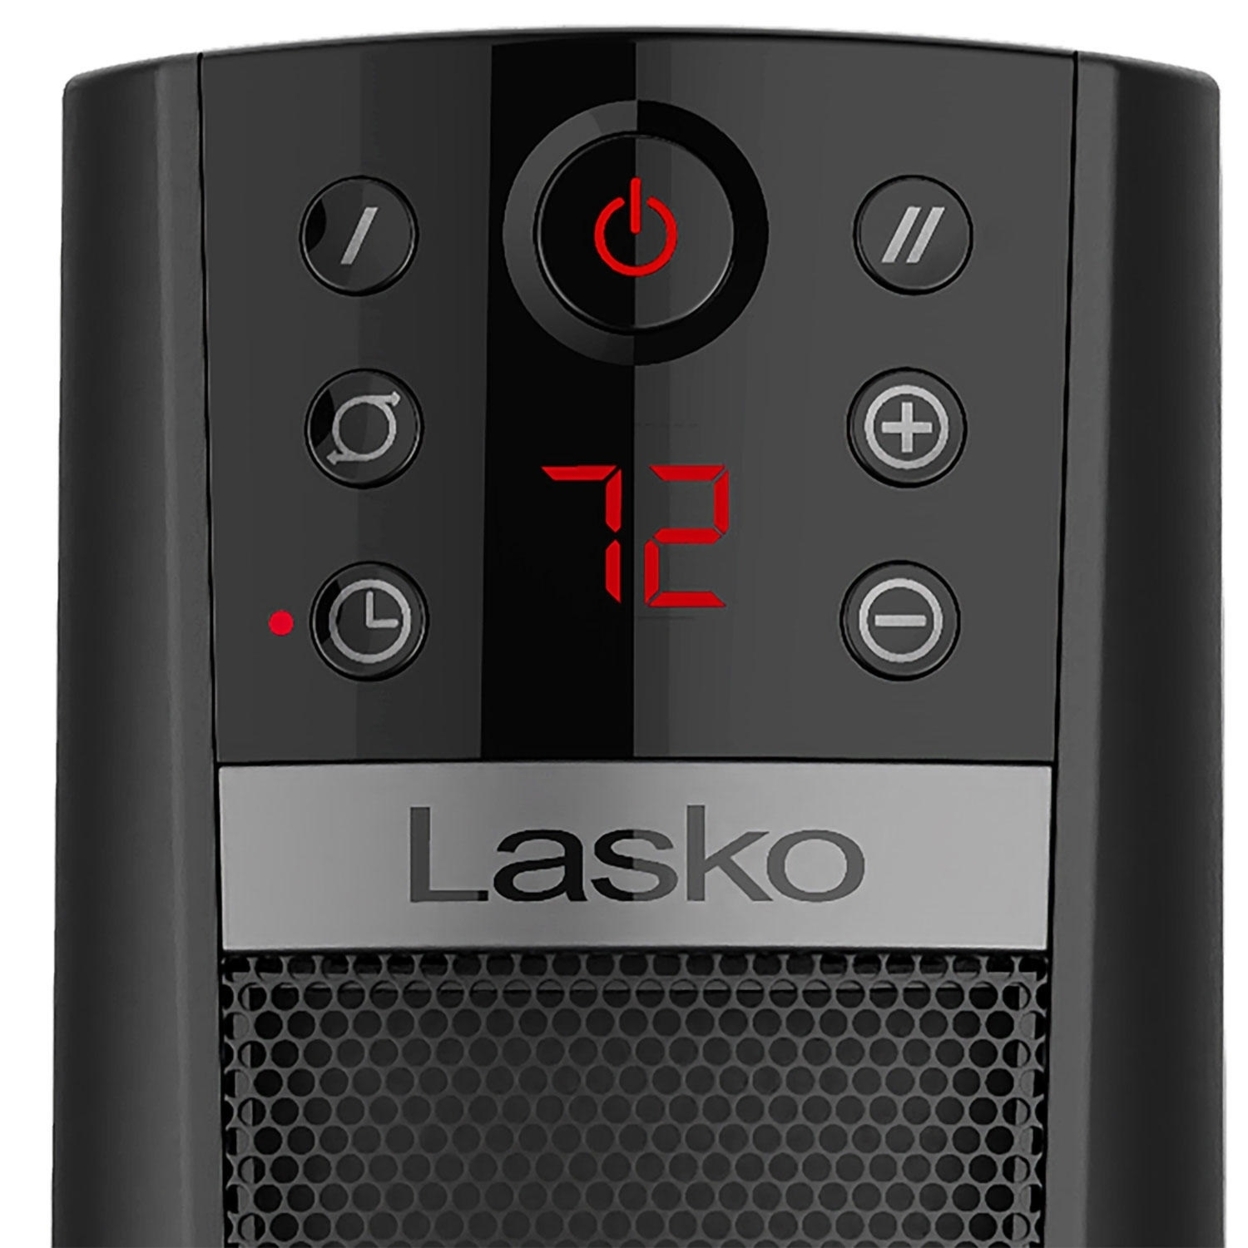 Lasko CT32791 32 Ceramic Tower Heater With Remote Control